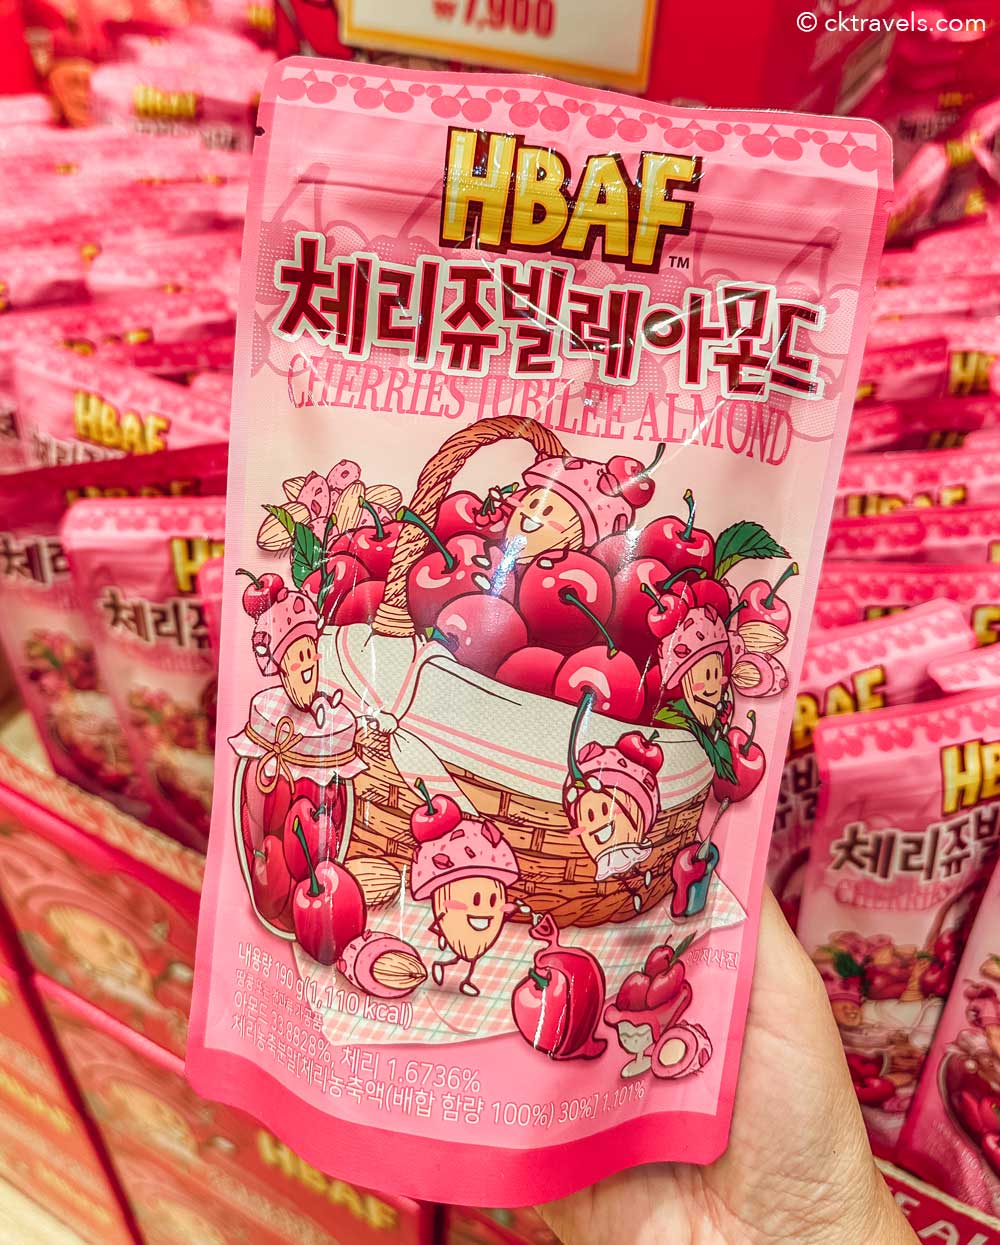 HBAF Cherries Jubilee Almonds south korea